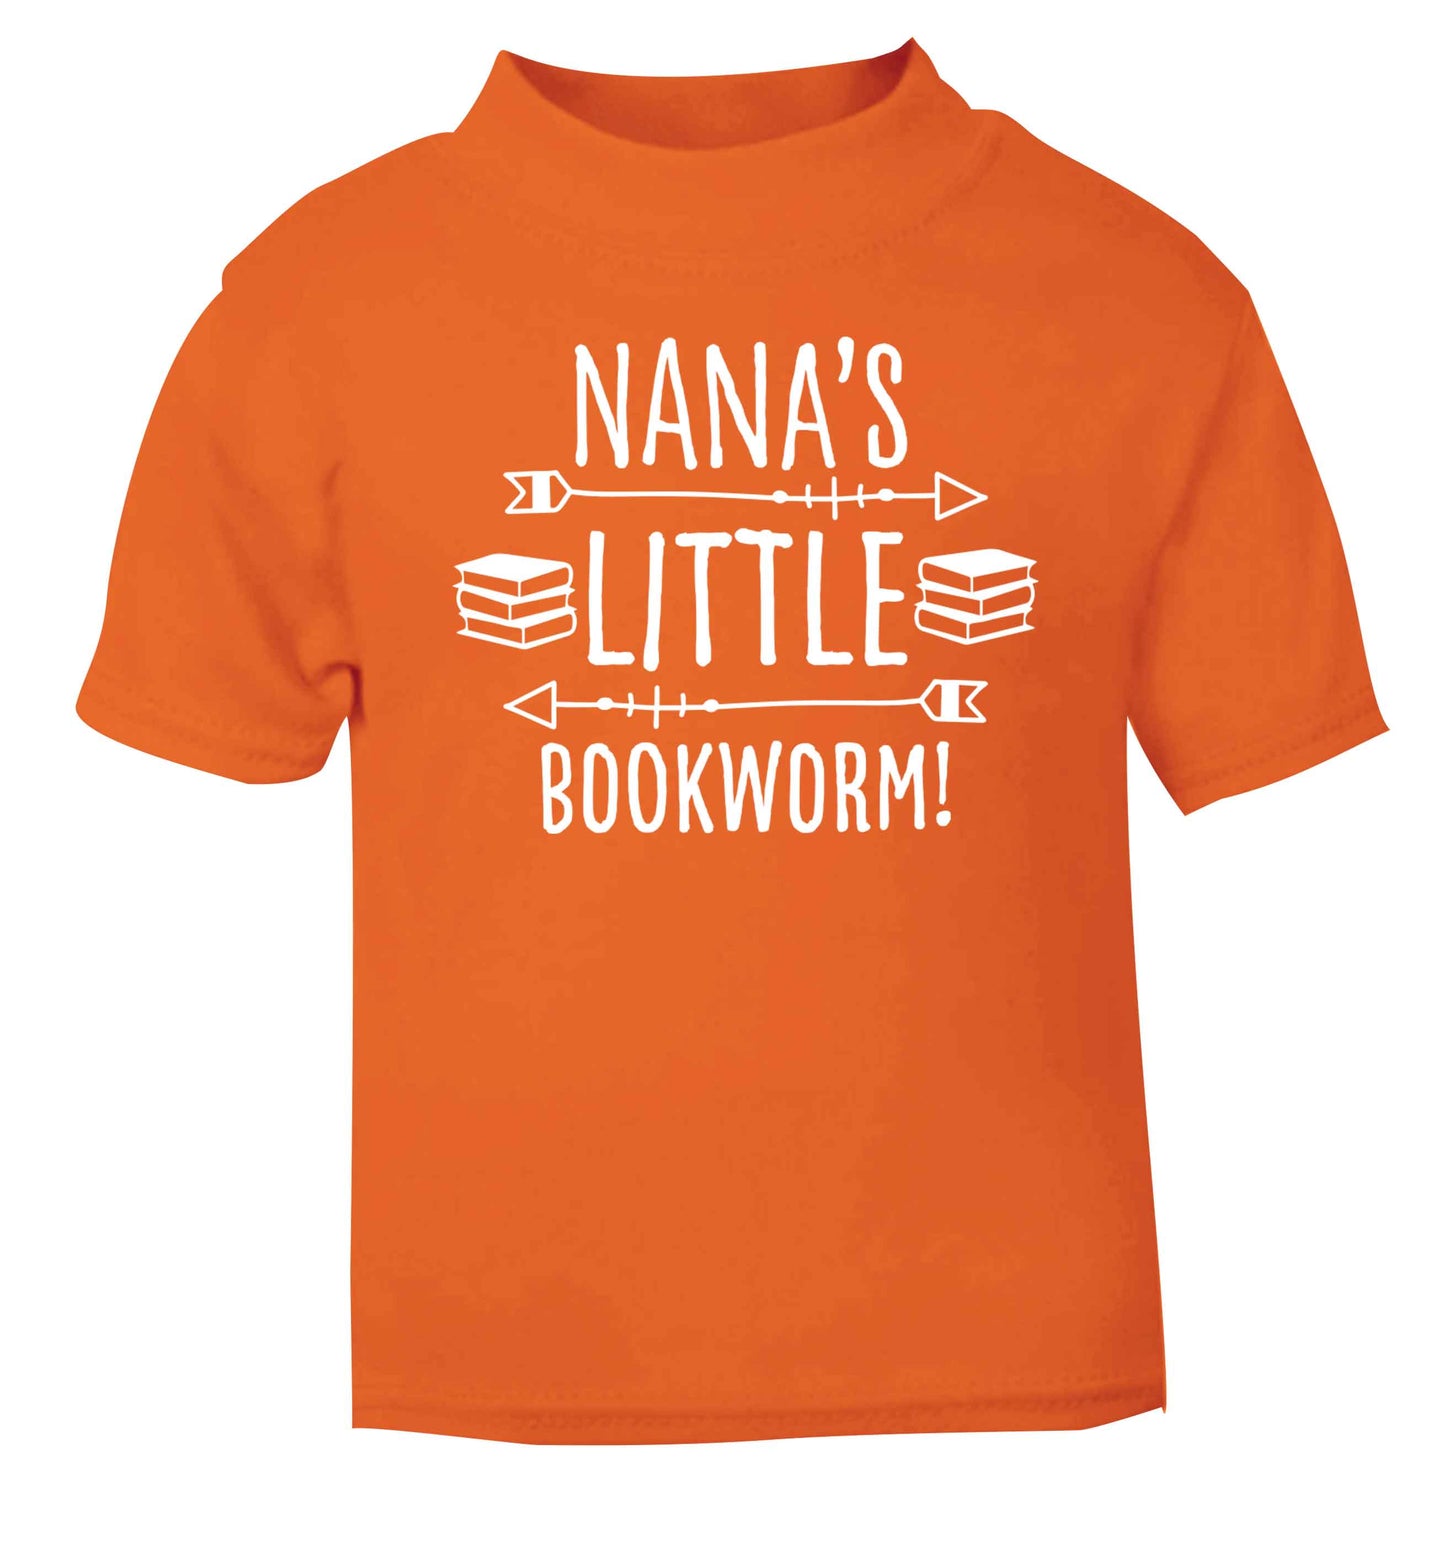 Nana's little bookworm orange baby toddler Tshirt 2 Years